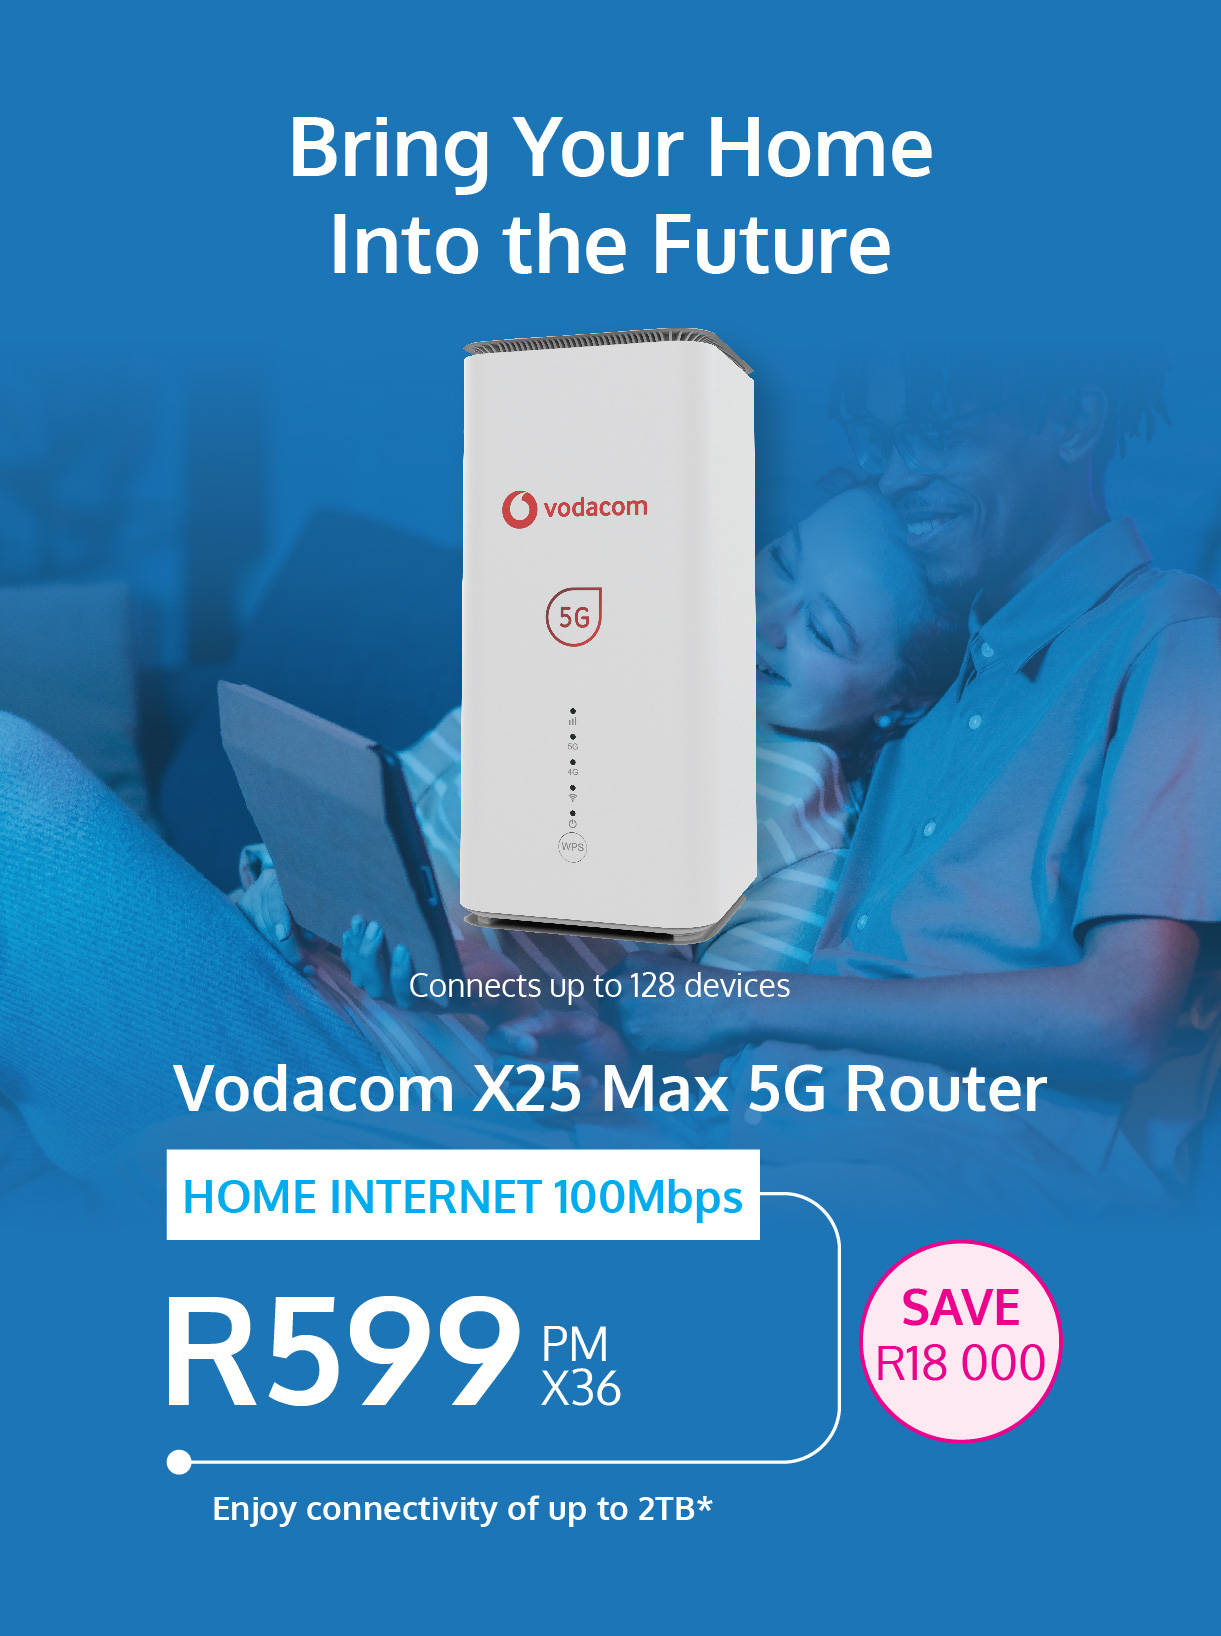 Vodacom X25 Max 5G Router - Data Contrat Deal - April